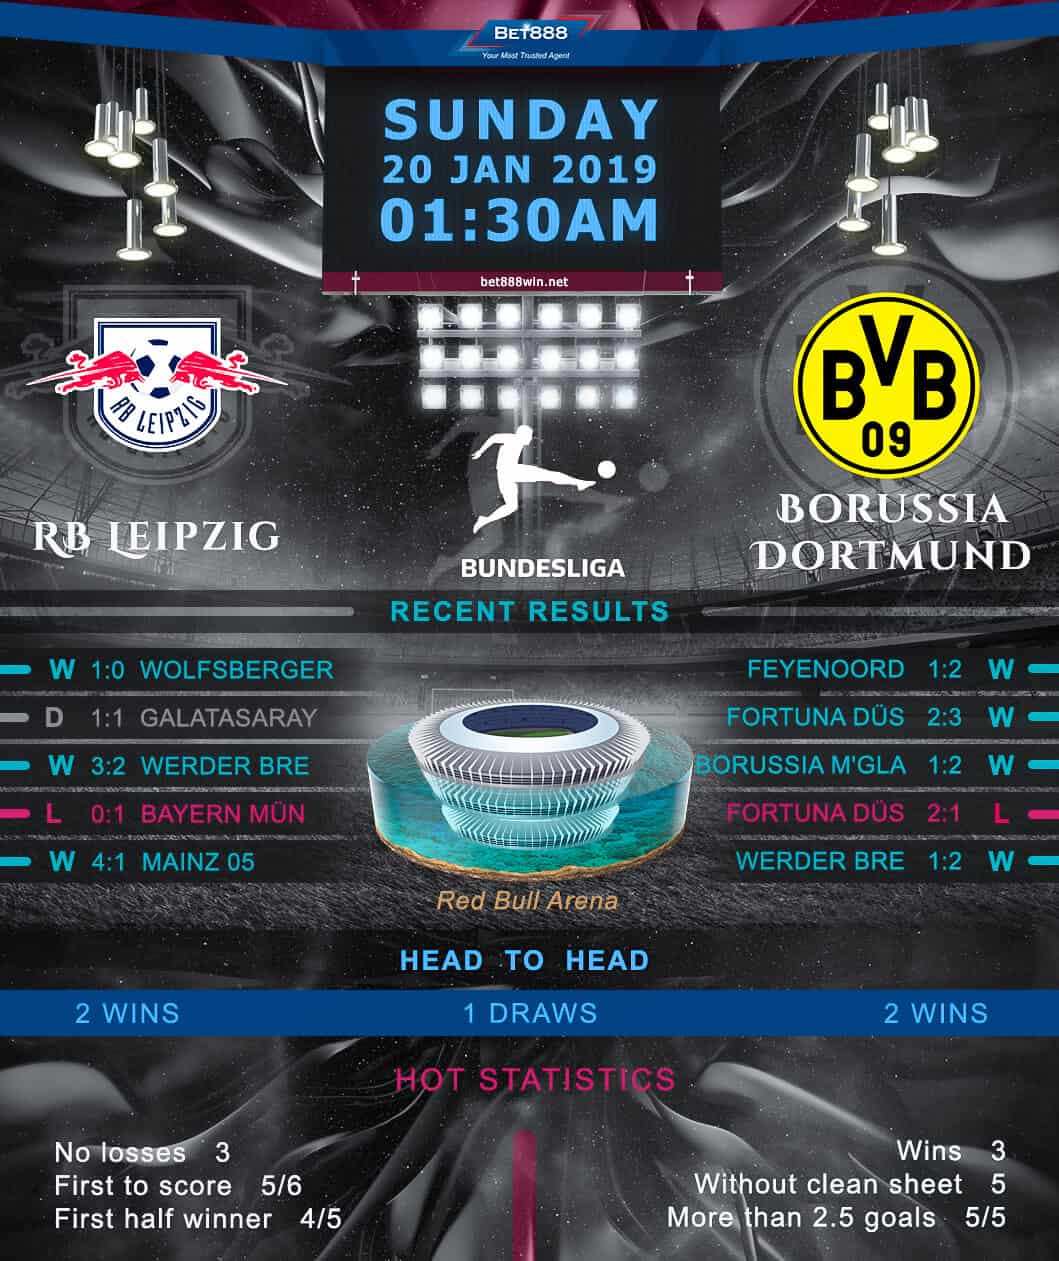 RB Leipzig vs Borussia Dortmund 20/01/19